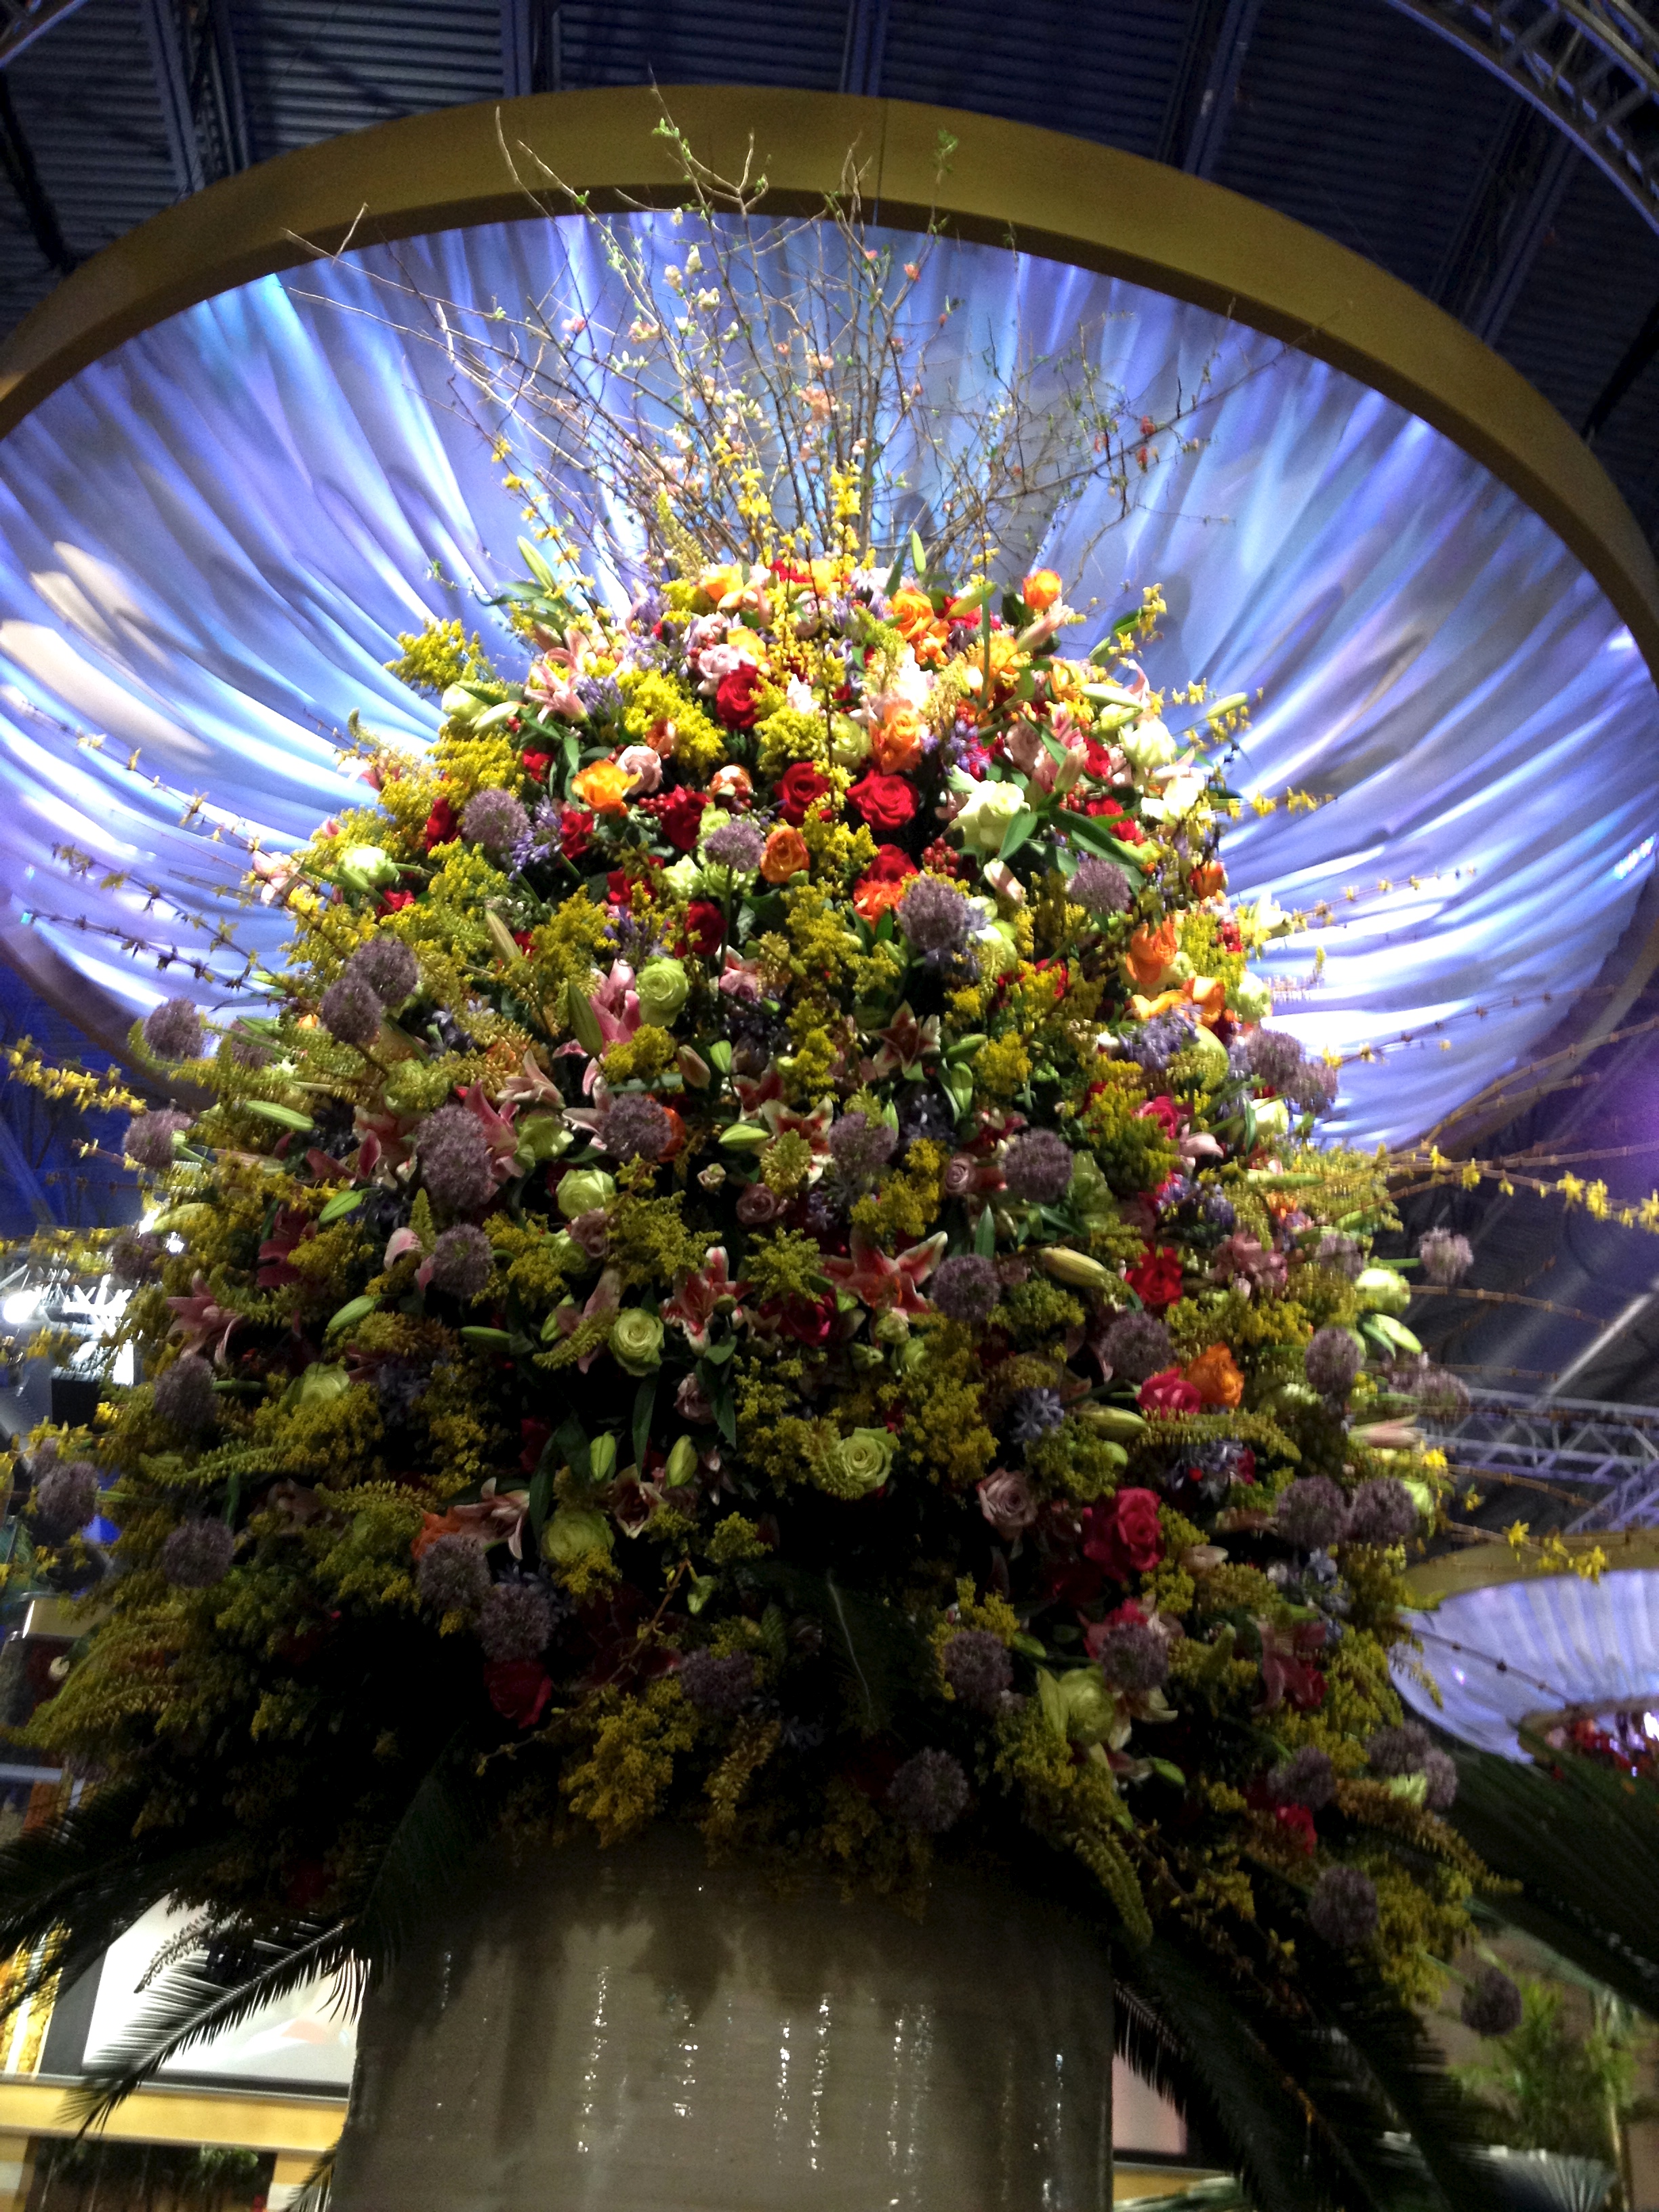 Spectacular flower arrangements